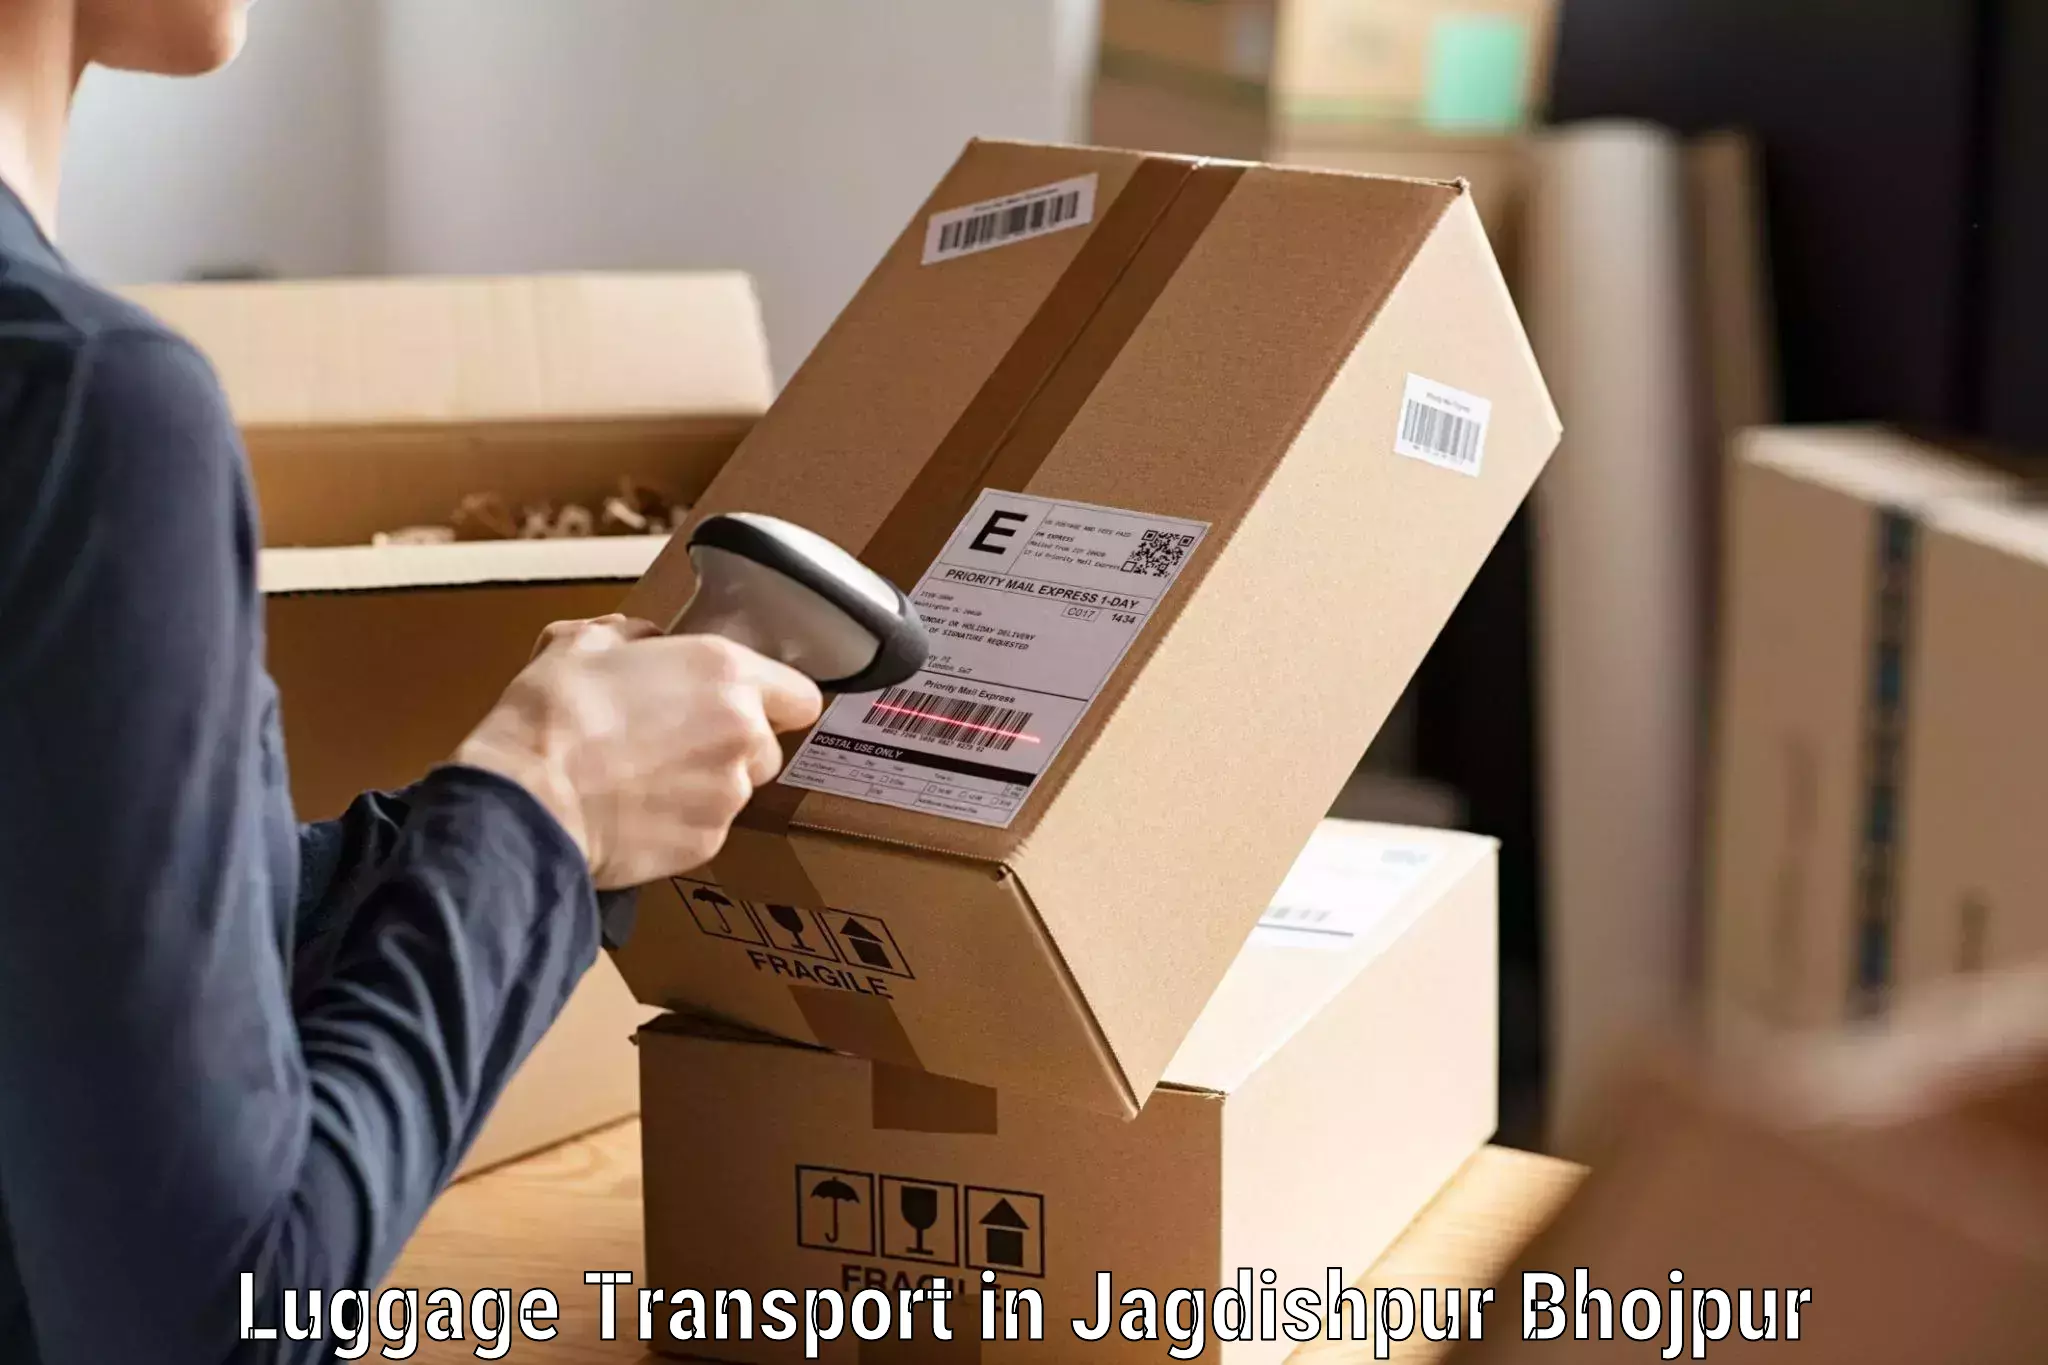 Luggage transport consultancy in Jagdishpur Bhojpur